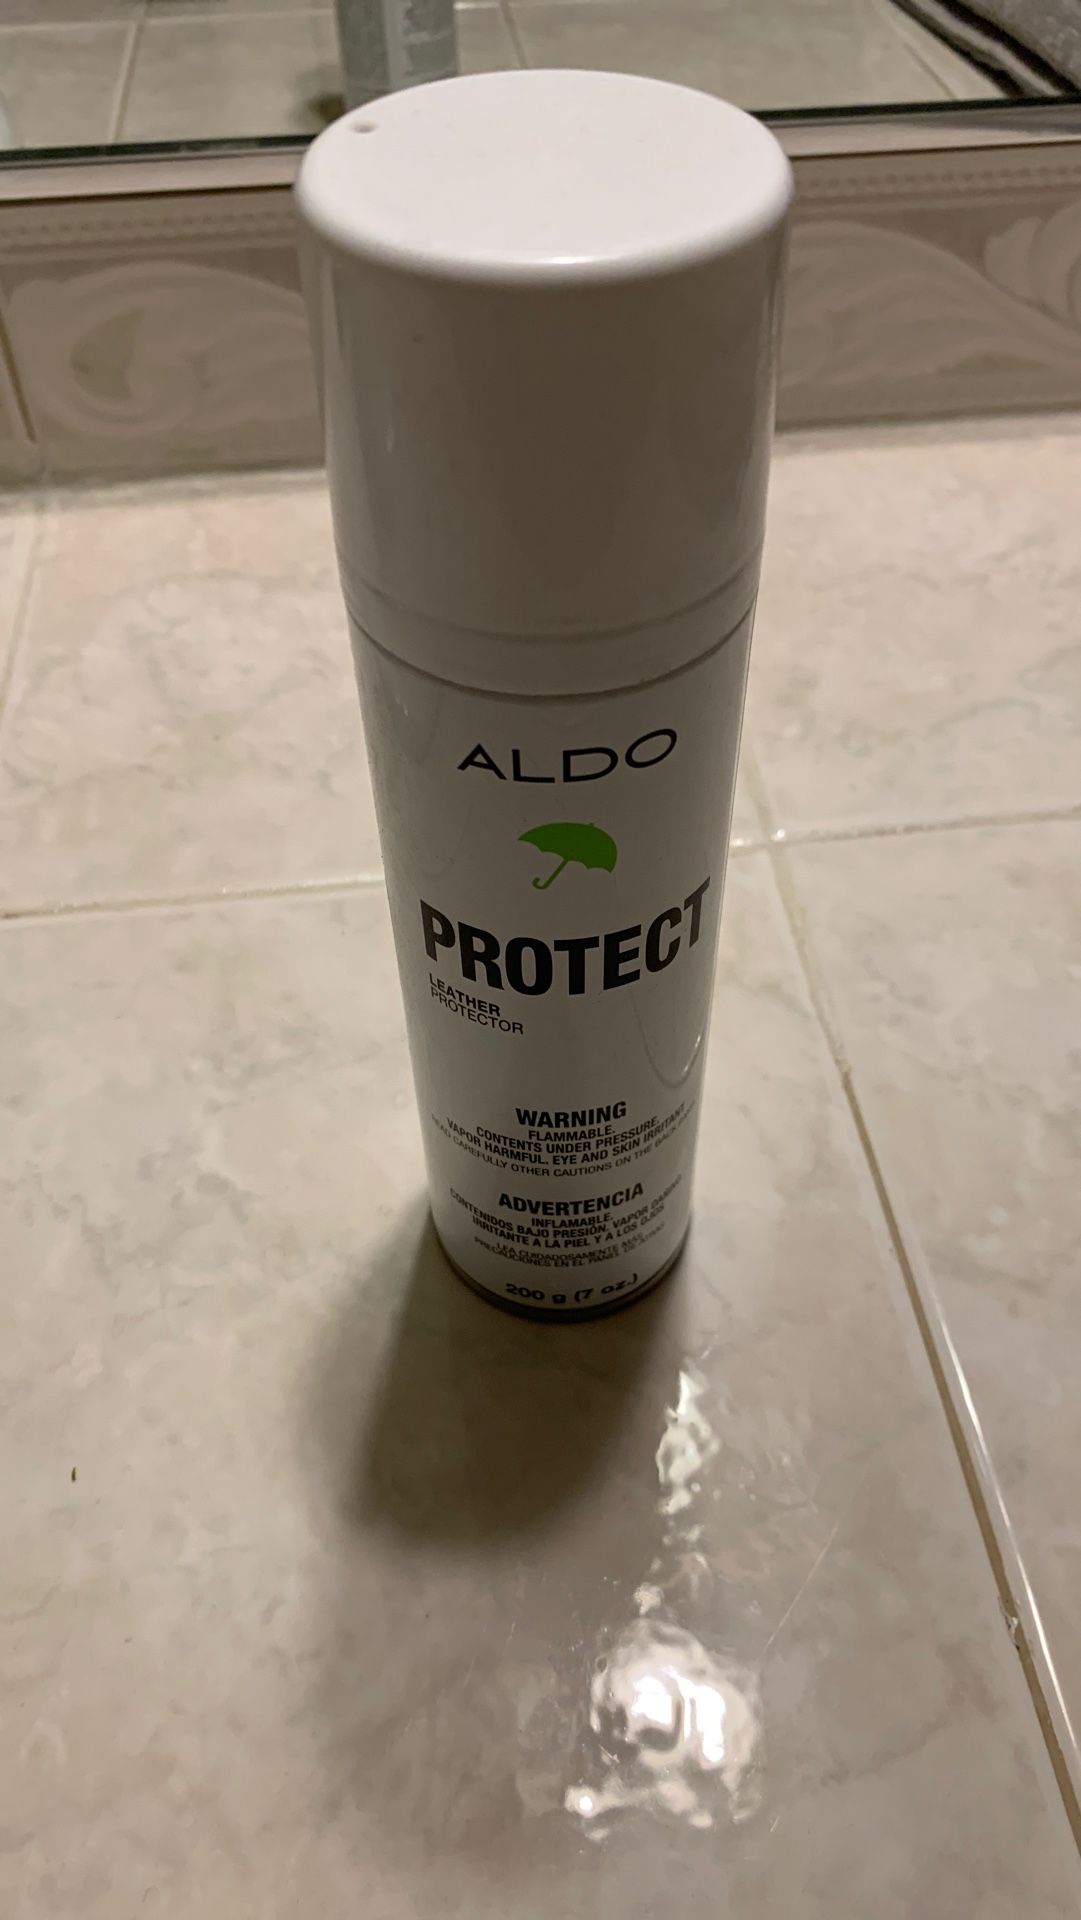 Aldo leather protector